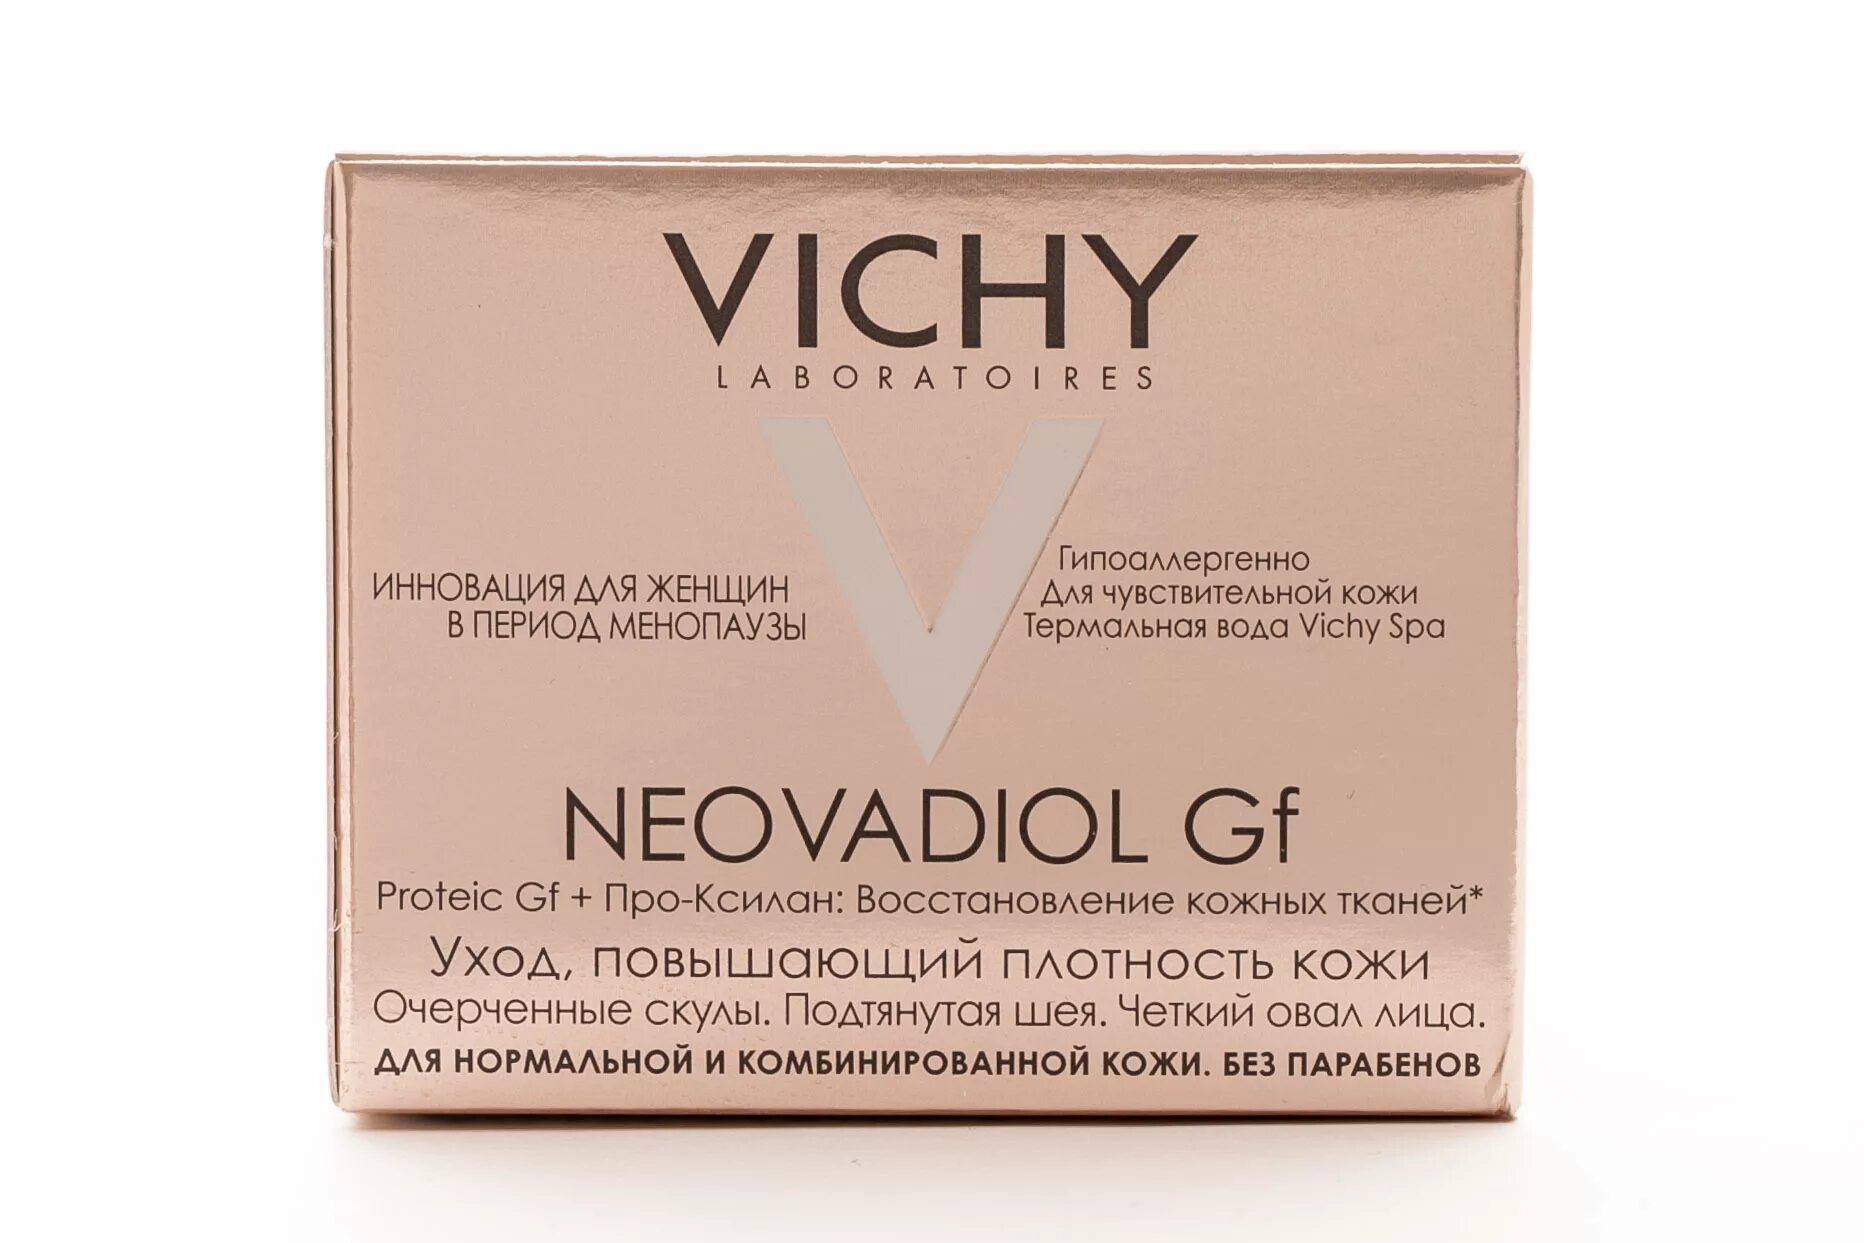 Vichy Neovadiol крем 50 + для комбинированной. Vichy Neovadiol крем для сухой кожи лица, 50мл. Vichy Neovadiol крем для нормальной и комбинированной кожи лица 50 мл. Виши Неовадиол дневной крем.